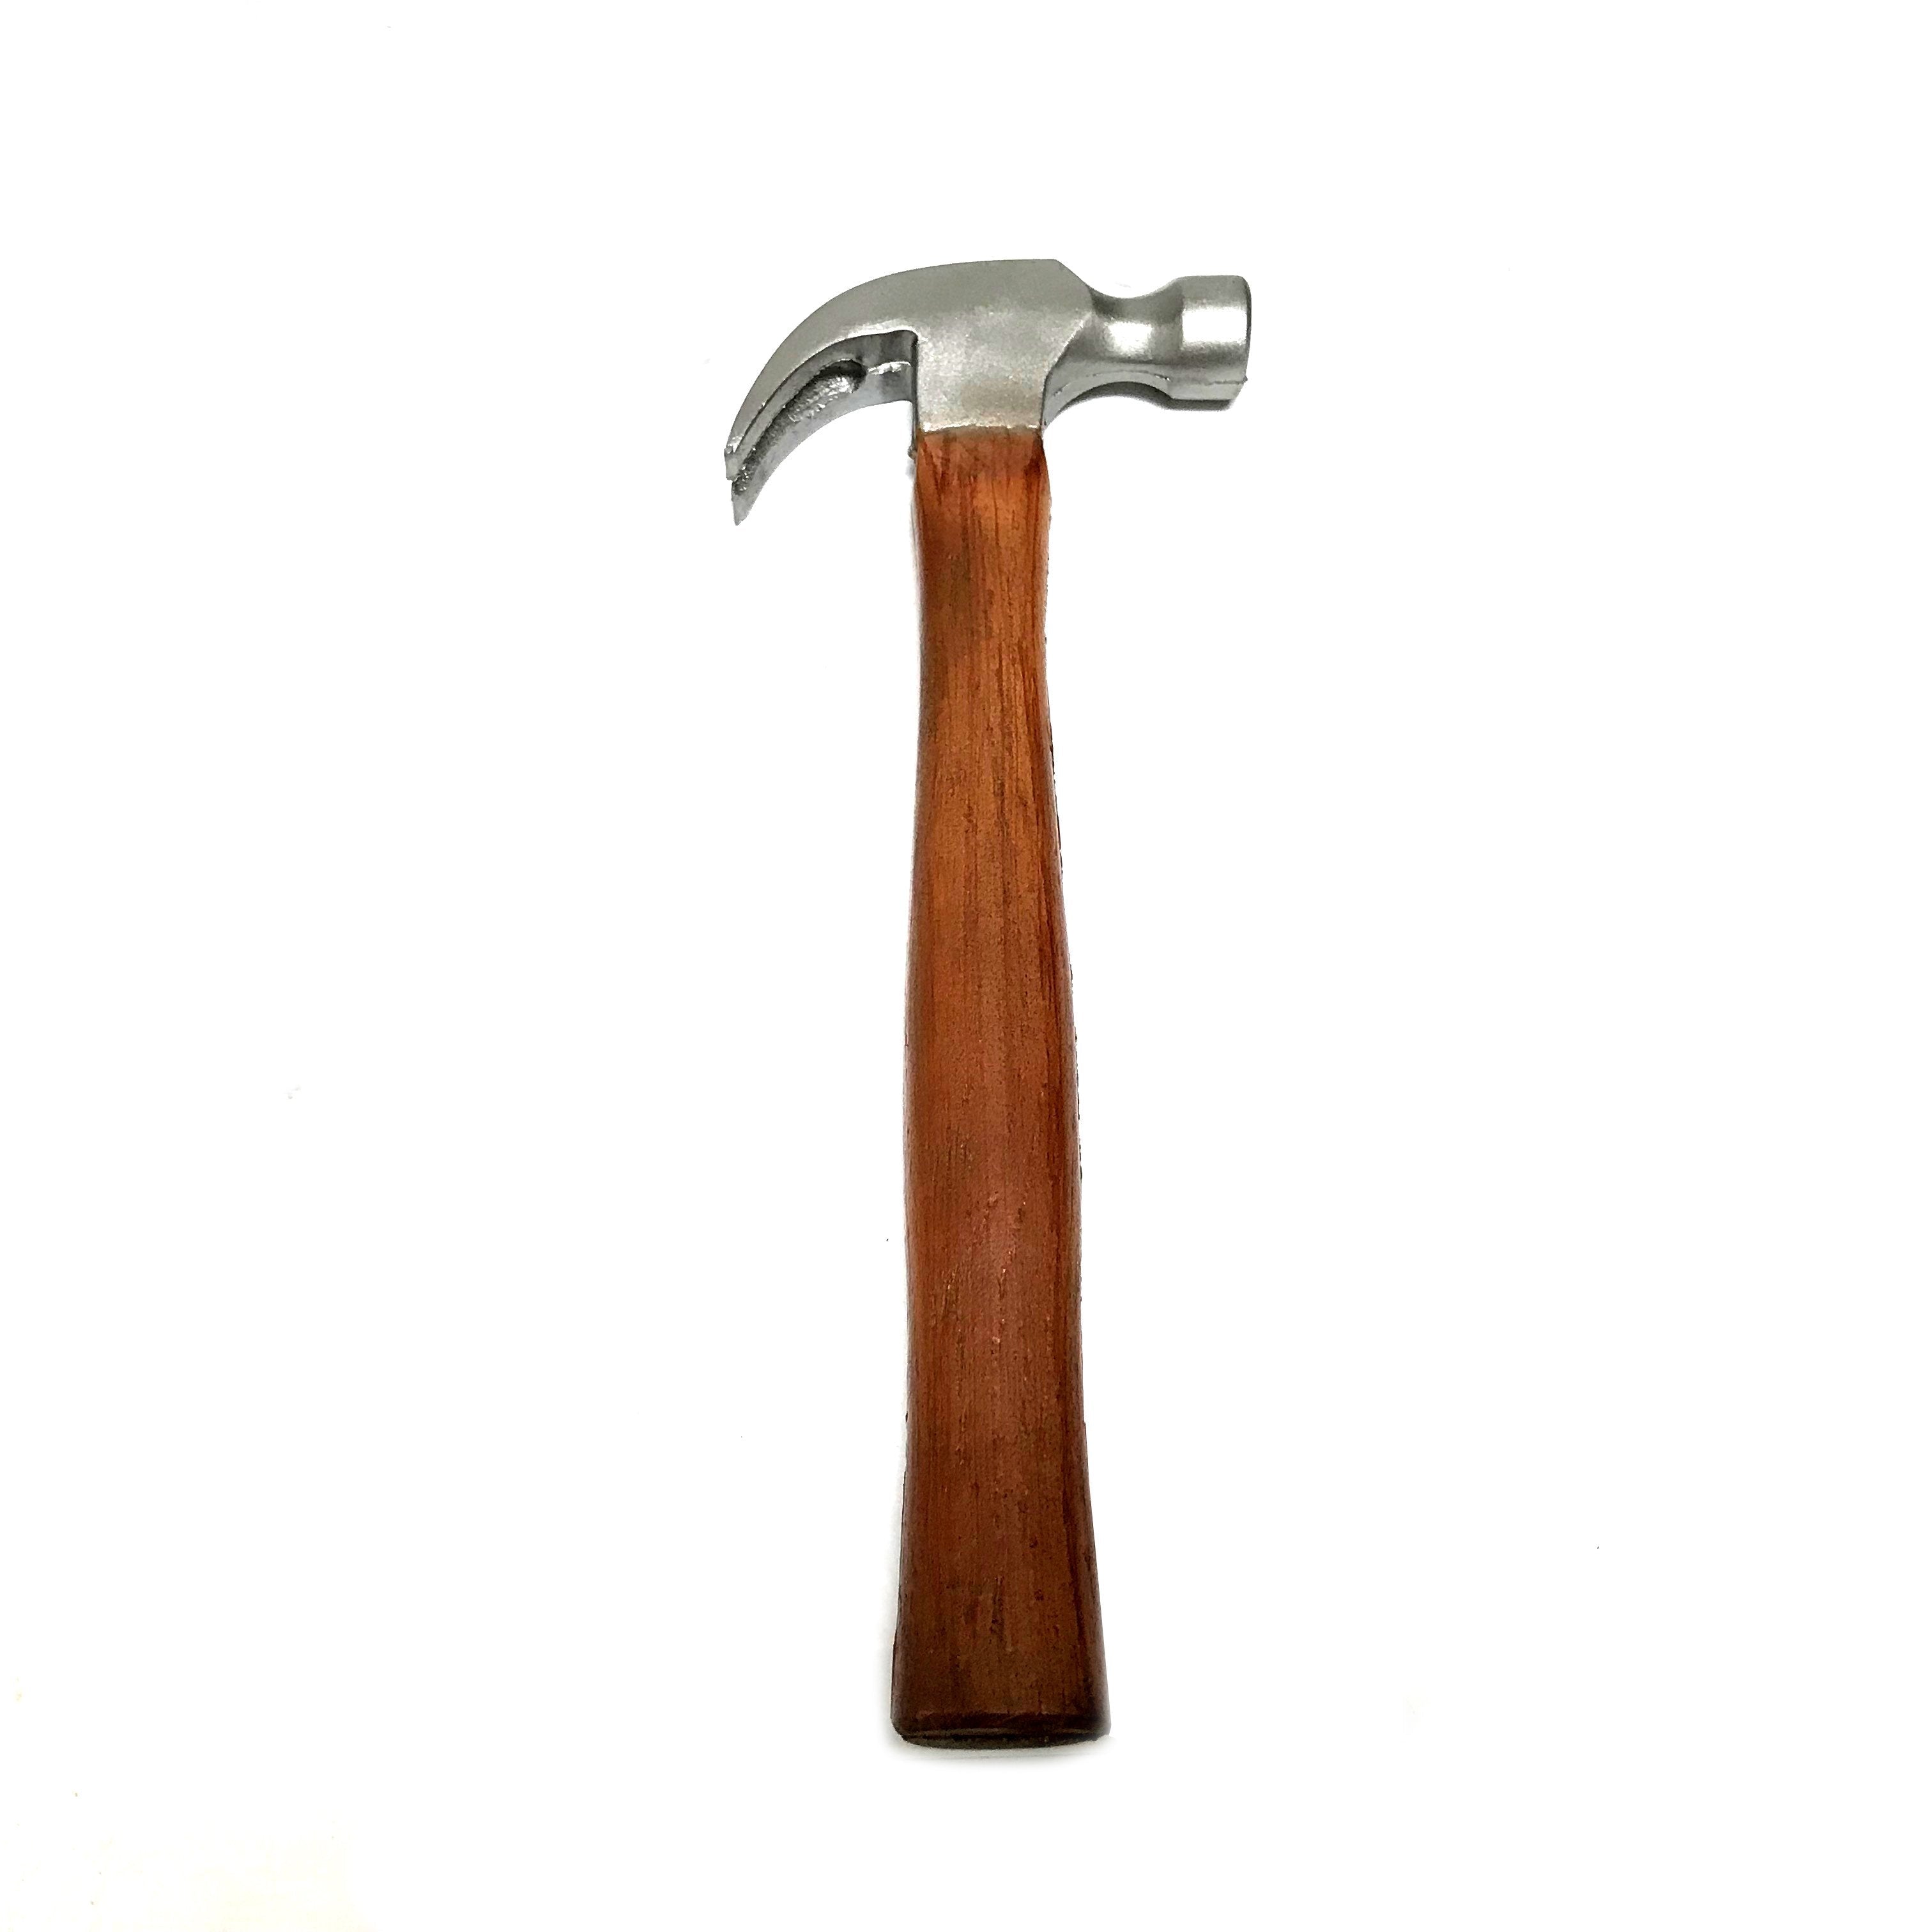 Foam Rubber Standard Claw Hammer Stunt Prop - SILVER - Silver Head with Lightwood Grain Handle